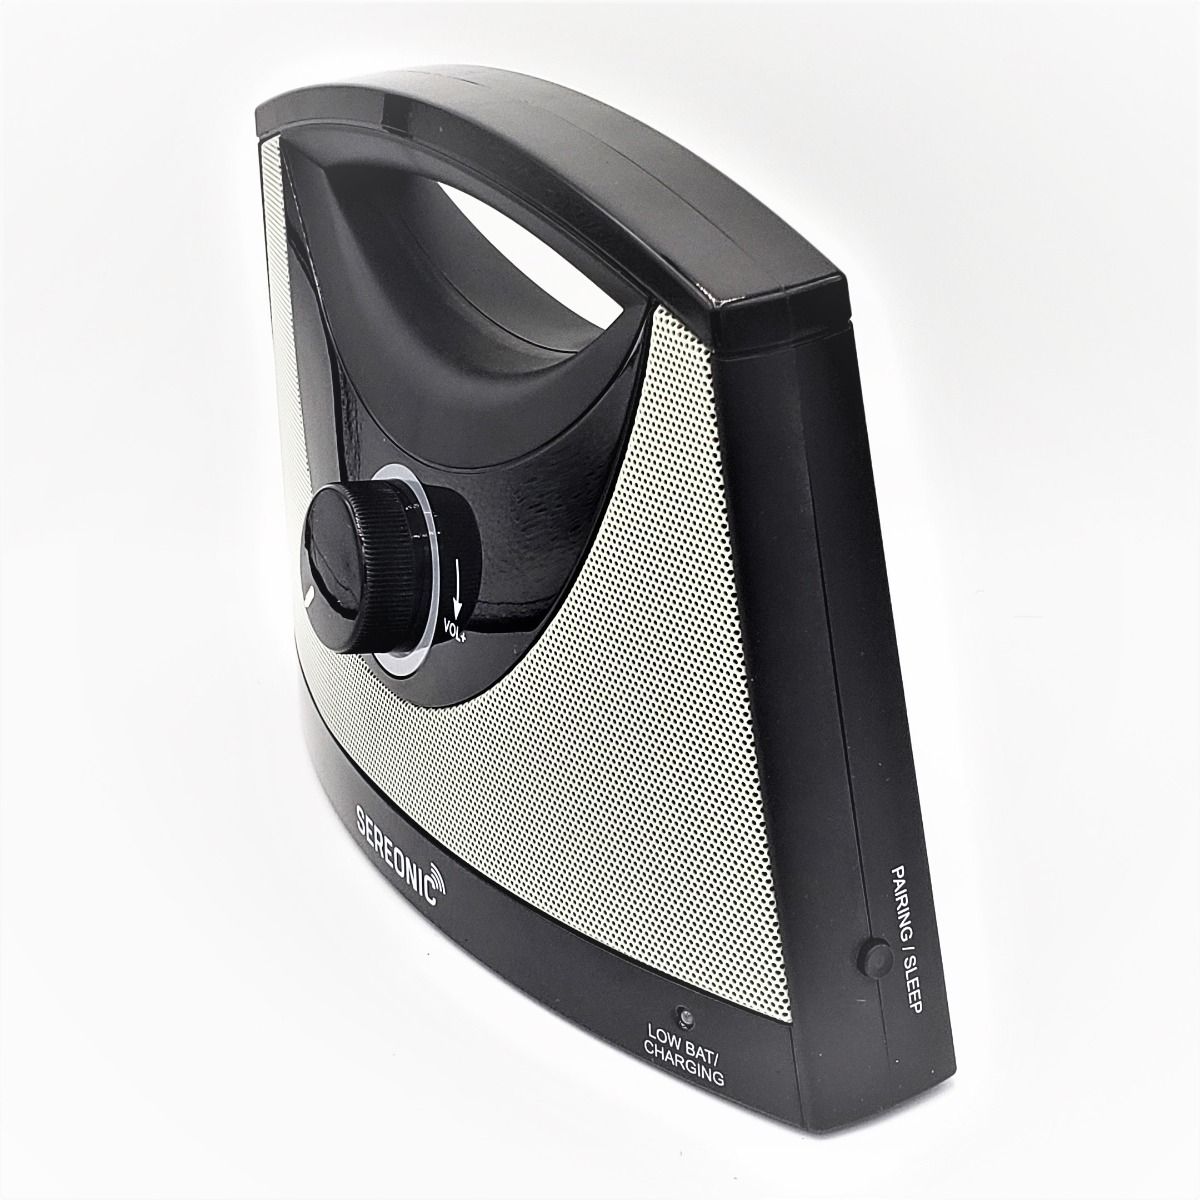 Serene Innovations Sereonic TV Soundbox Expansion Speaker (for Model BT-200)